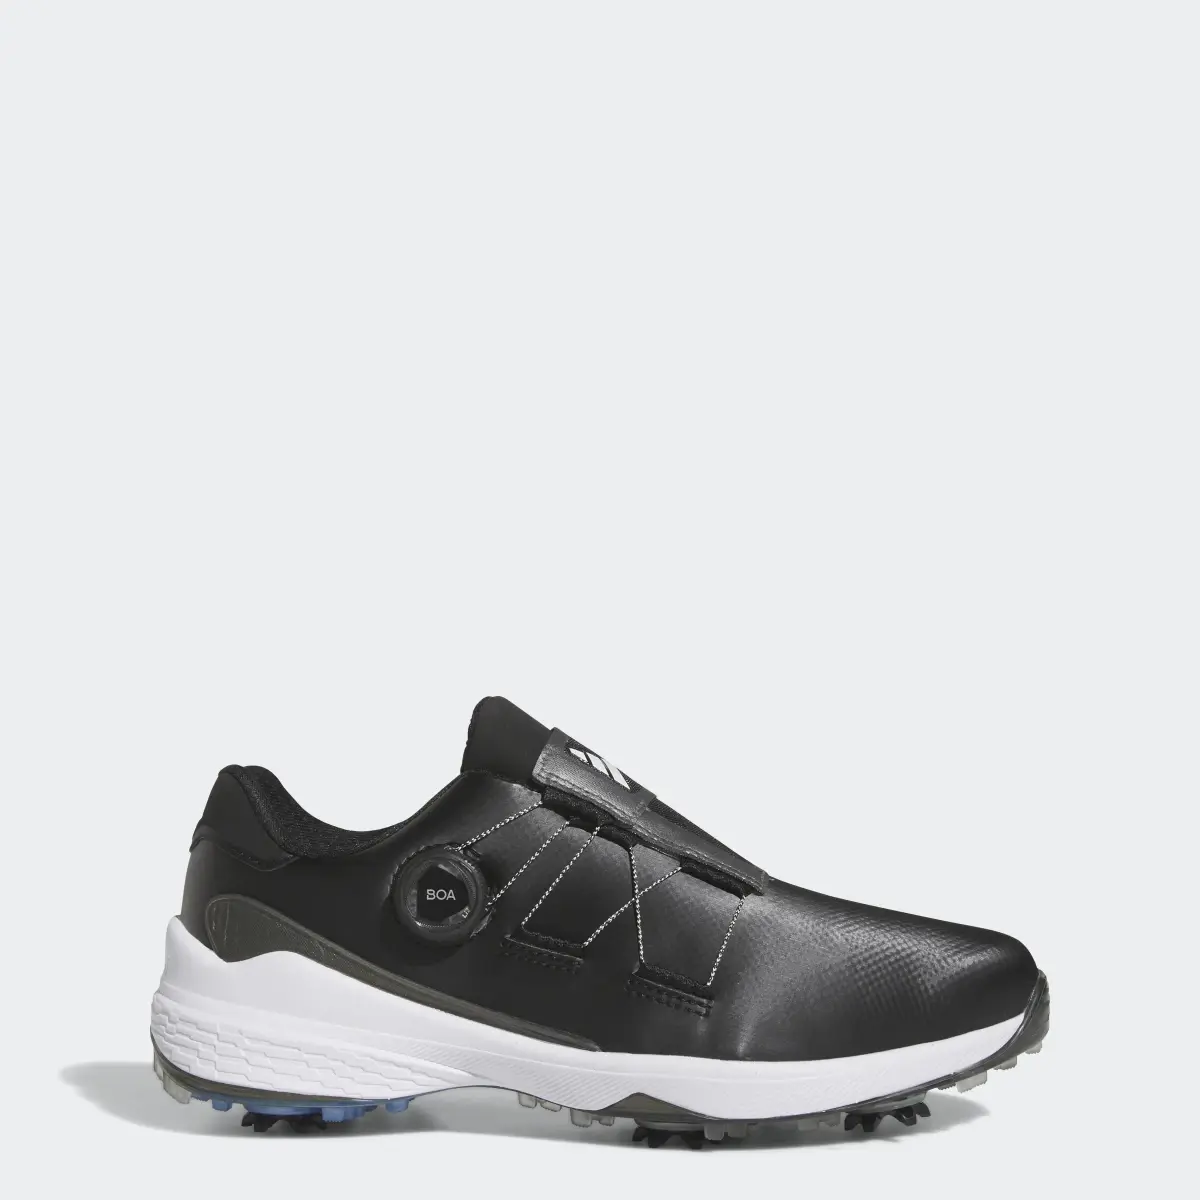 Adidas ZG23 BOA Lightstrike Golf Shoes. 1